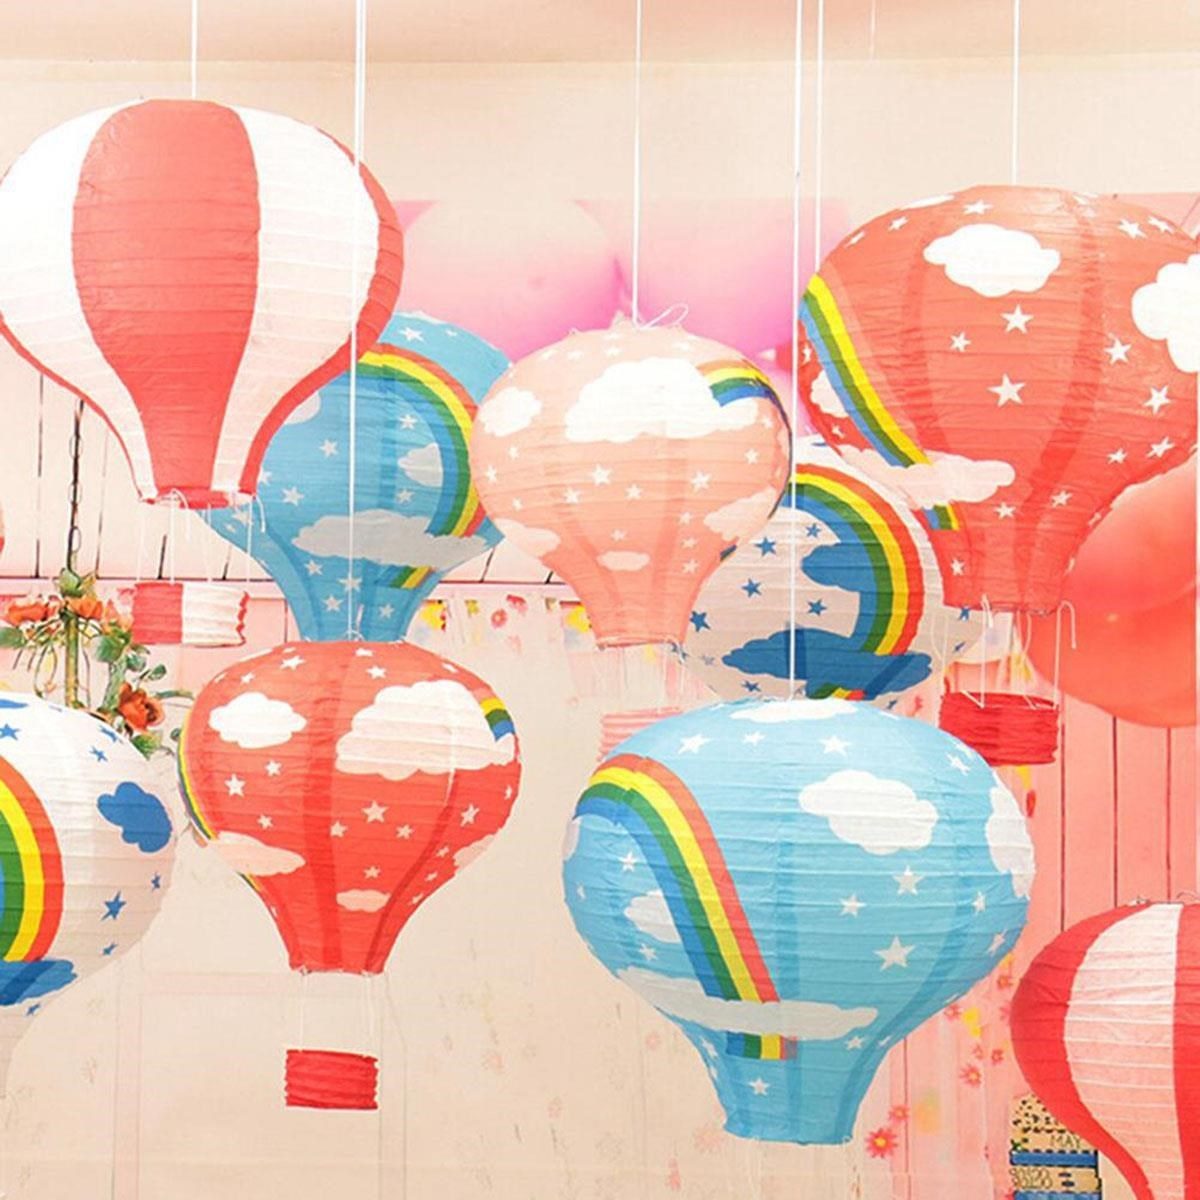 CLZ192 Dekoratif Renkli Kağıt Dilek Feneri Balonu Renkli Uçan Balon (4172)